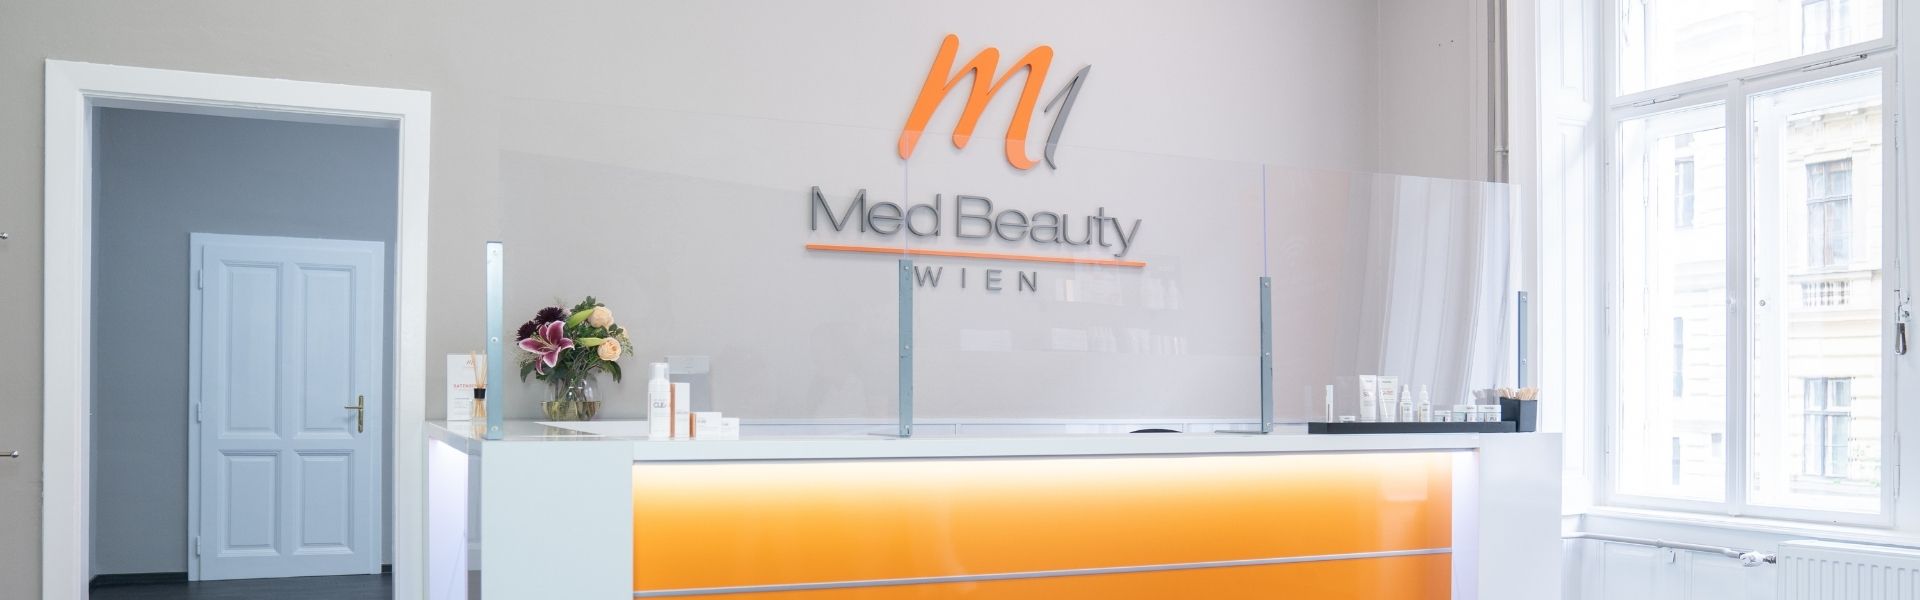 M1 Med Beauty Fachzentrum Wien